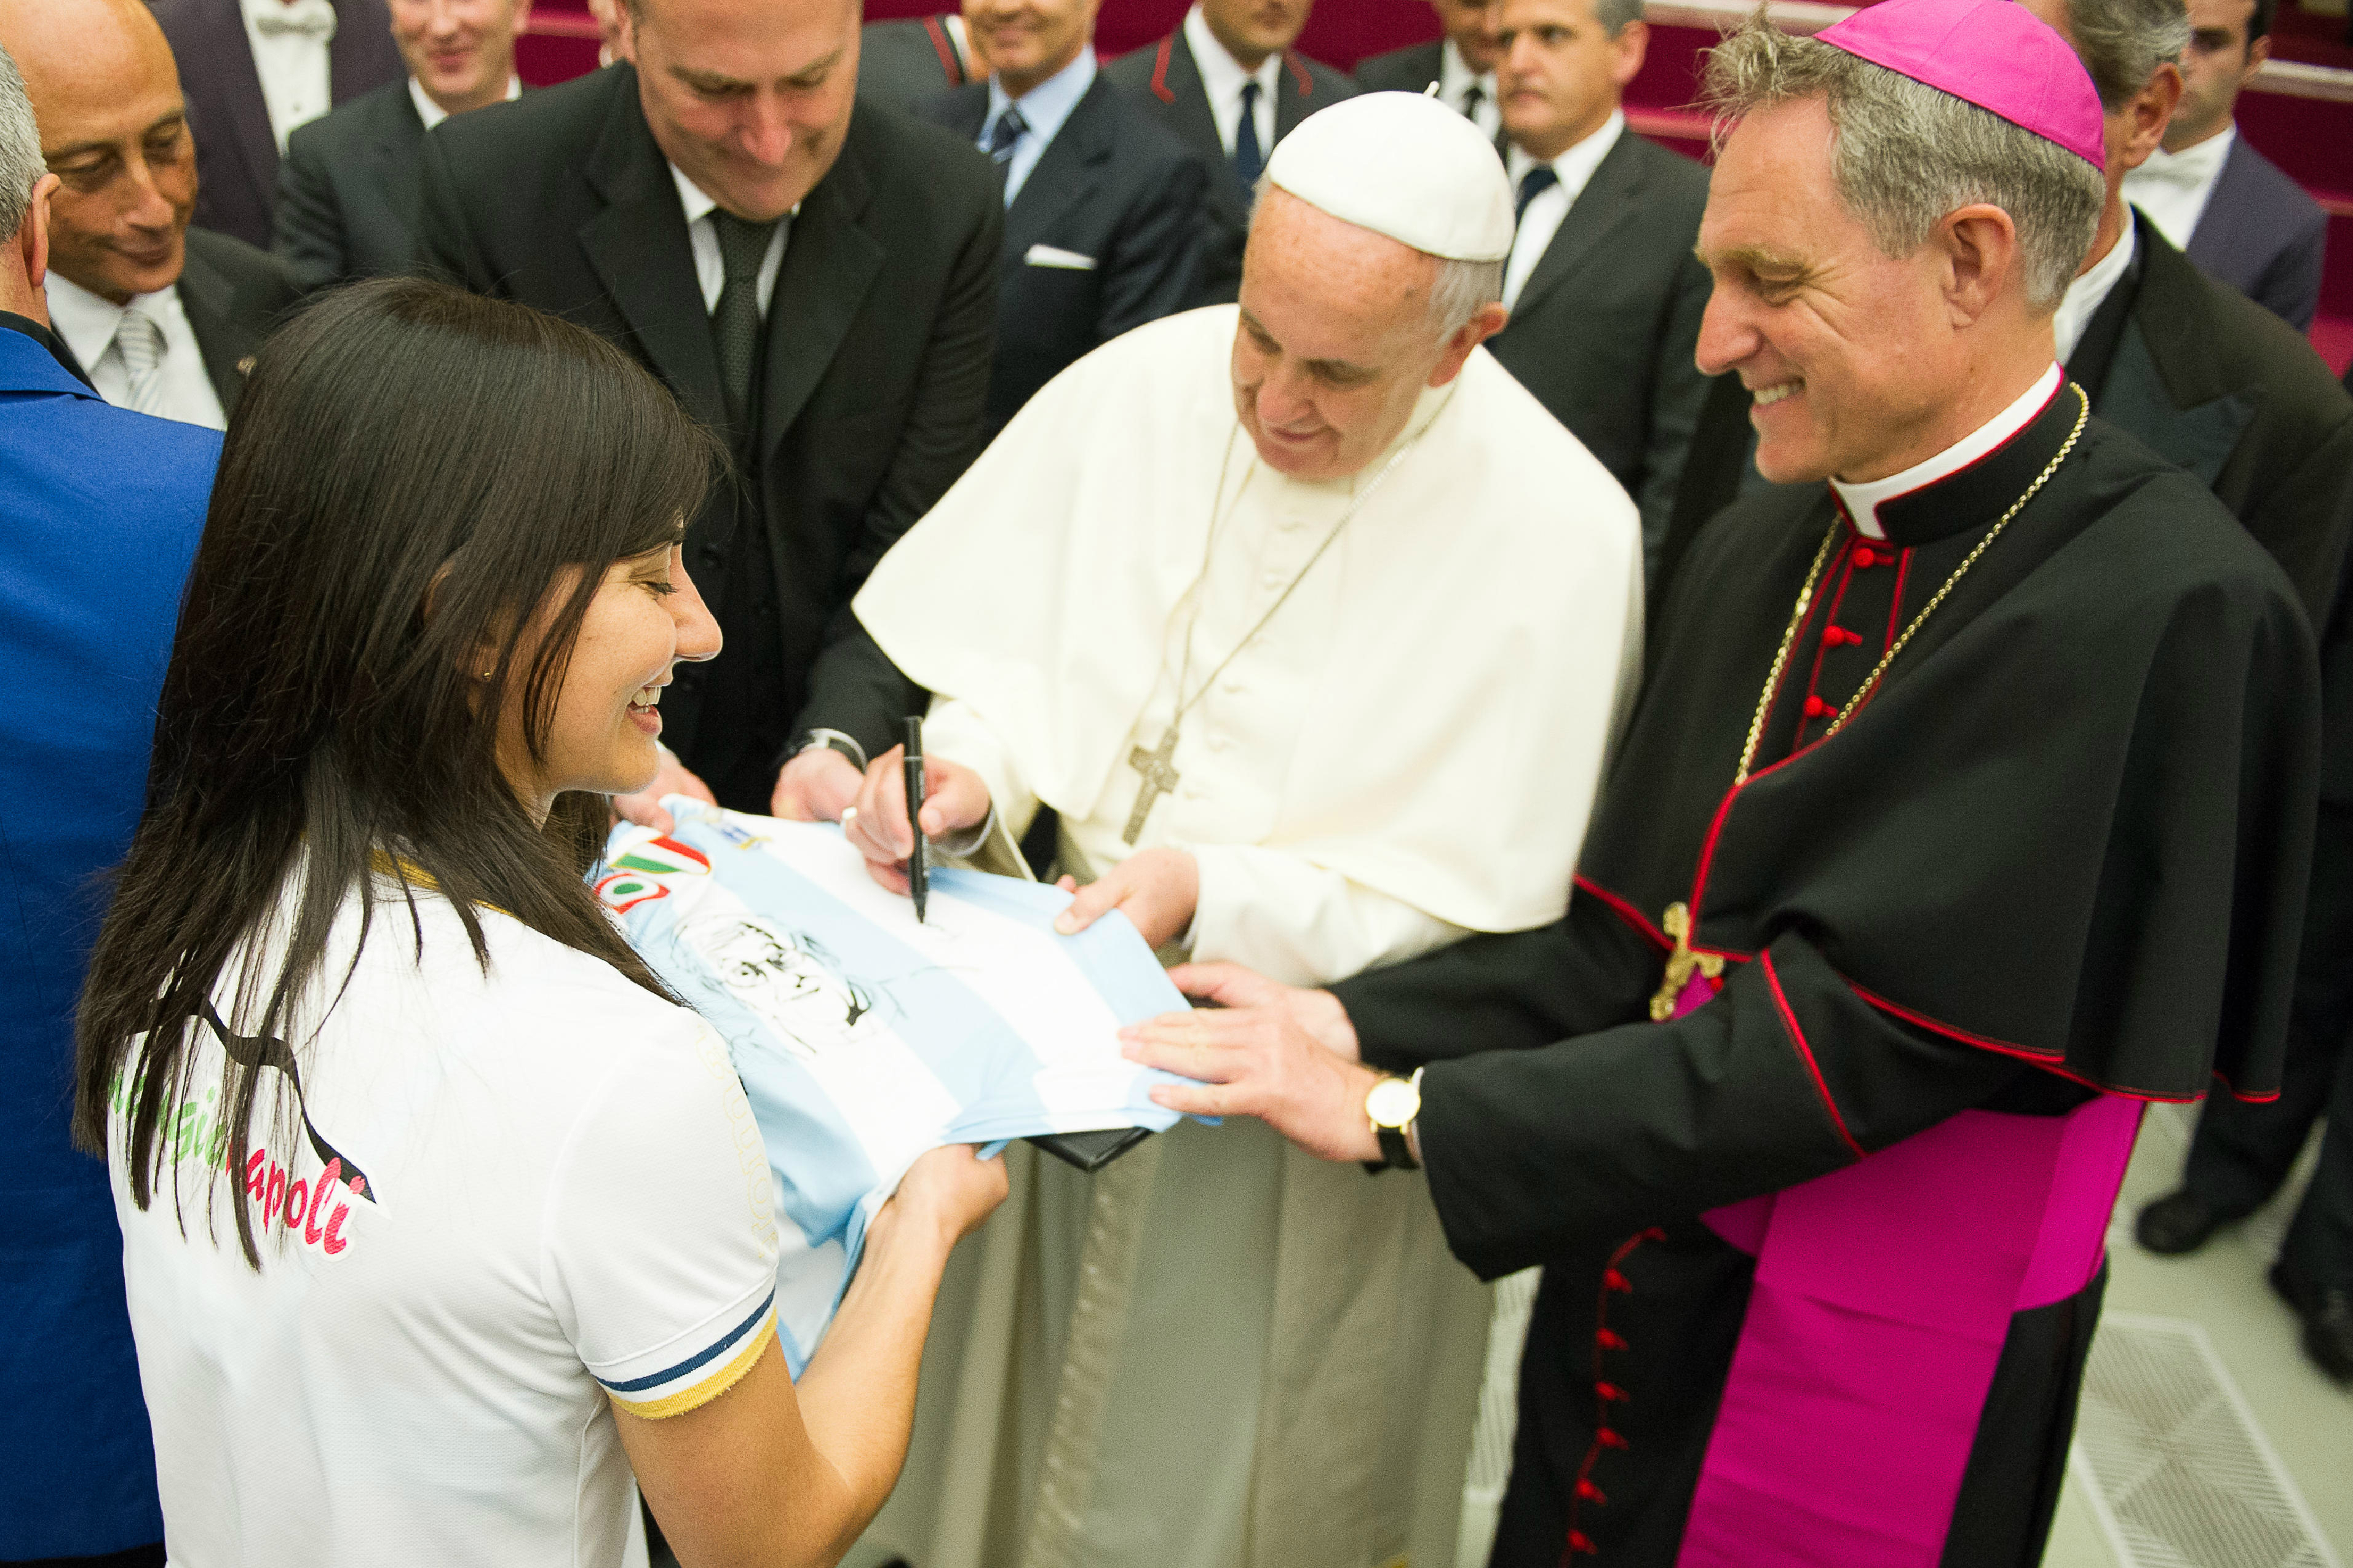 Pope Francis met with members of S.S. Lazio